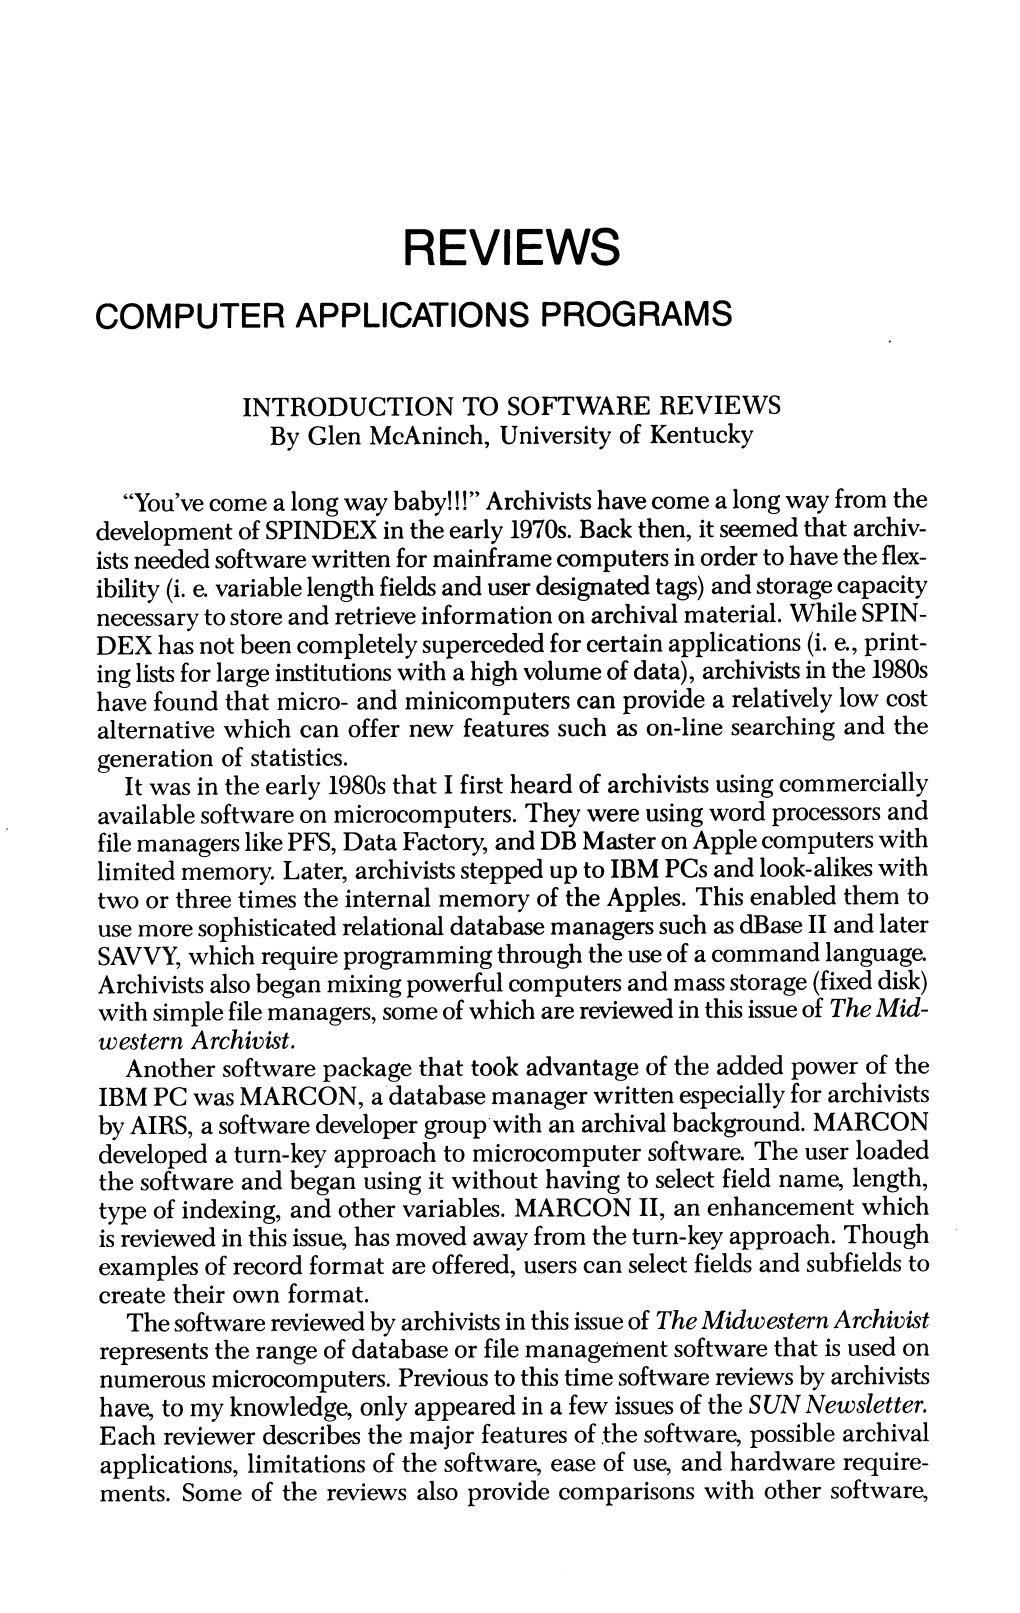 Reviews Computer Applications Programs